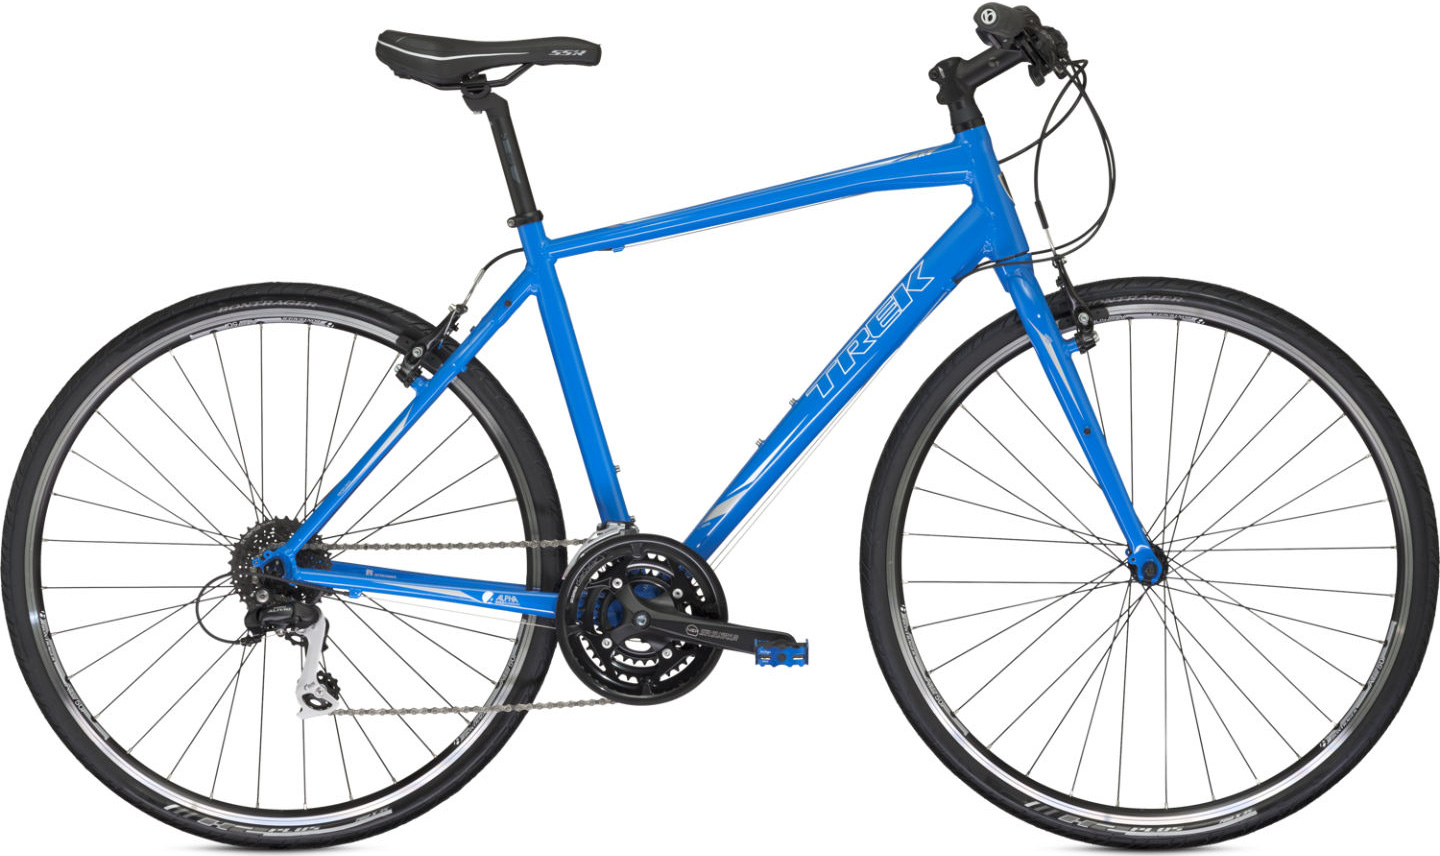 2013 Trek 7.2 FX - Bicycle Details 